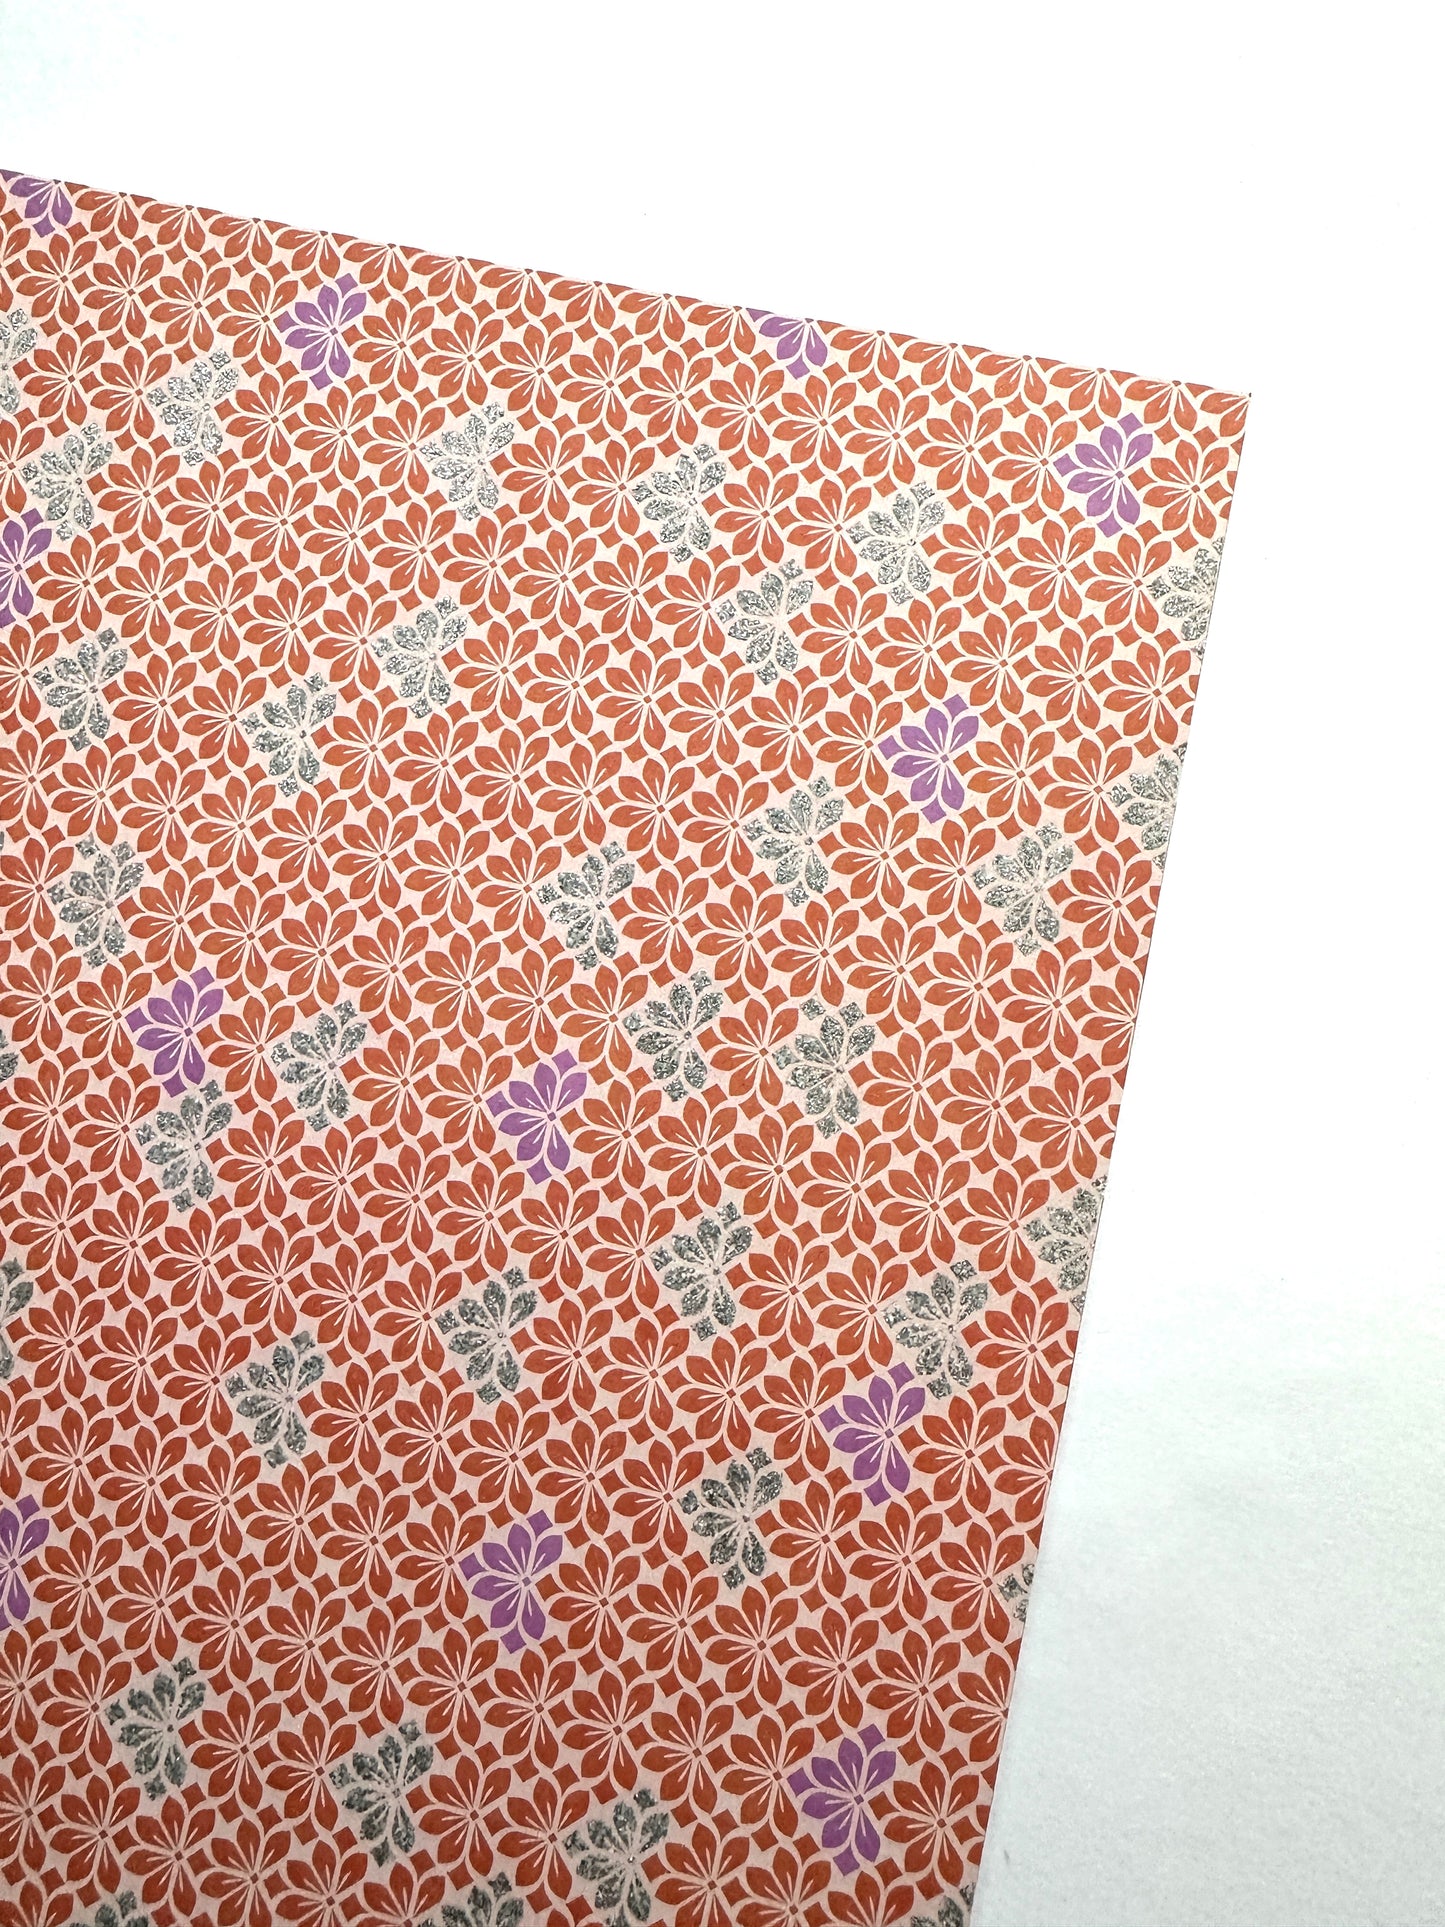 30,5 x 30,5 cm 30 sheets PAPER PAD - design paper (glitter effekt)